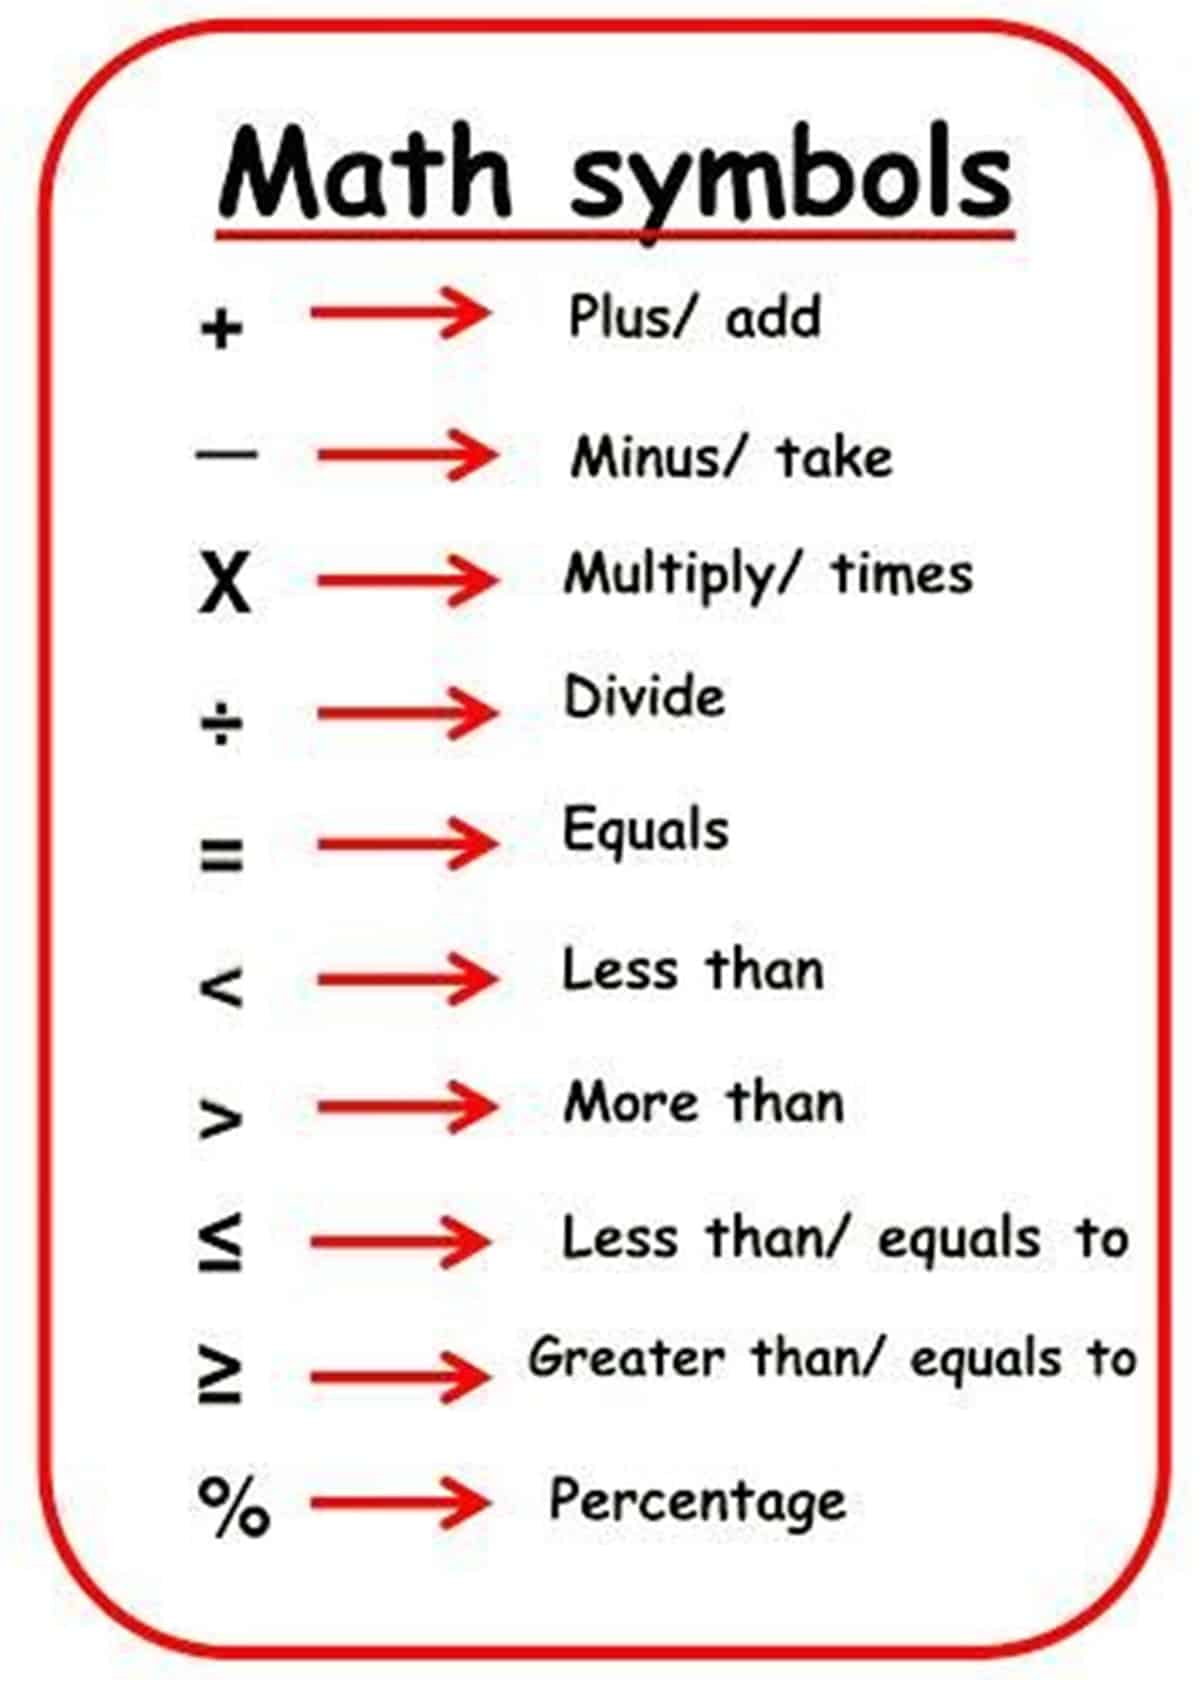 Math symbols in English